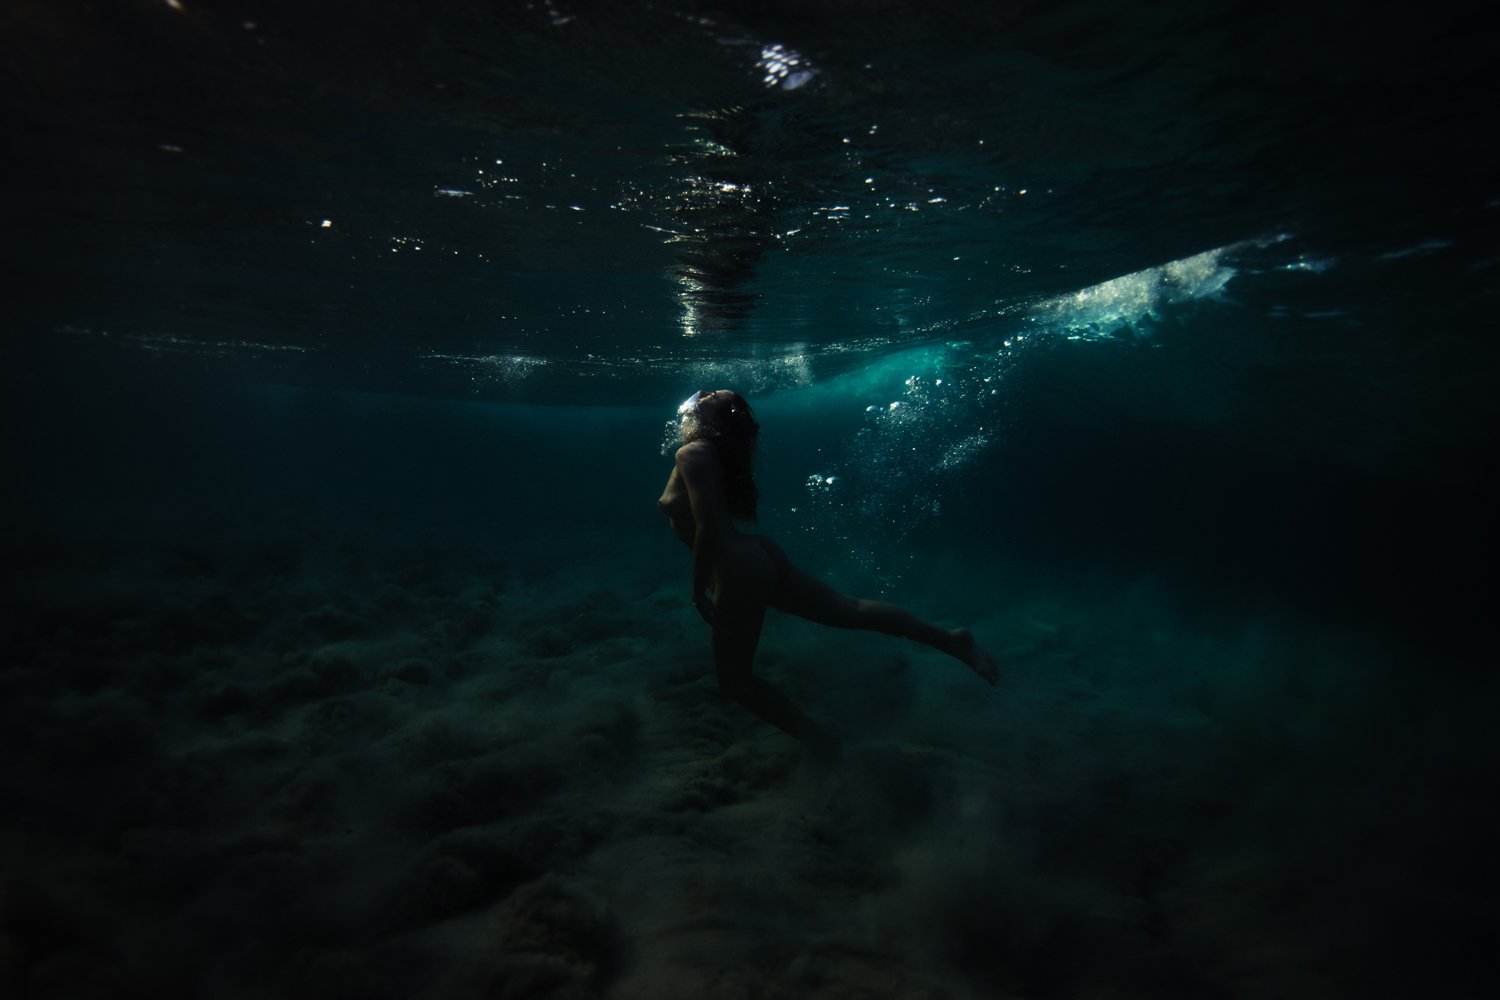 underwater corse corsica sea mediterranean island france french photographer photographe ajaccio Krista Espino Capo di feno wave nude nue femme woman fine art photography-74.jpg